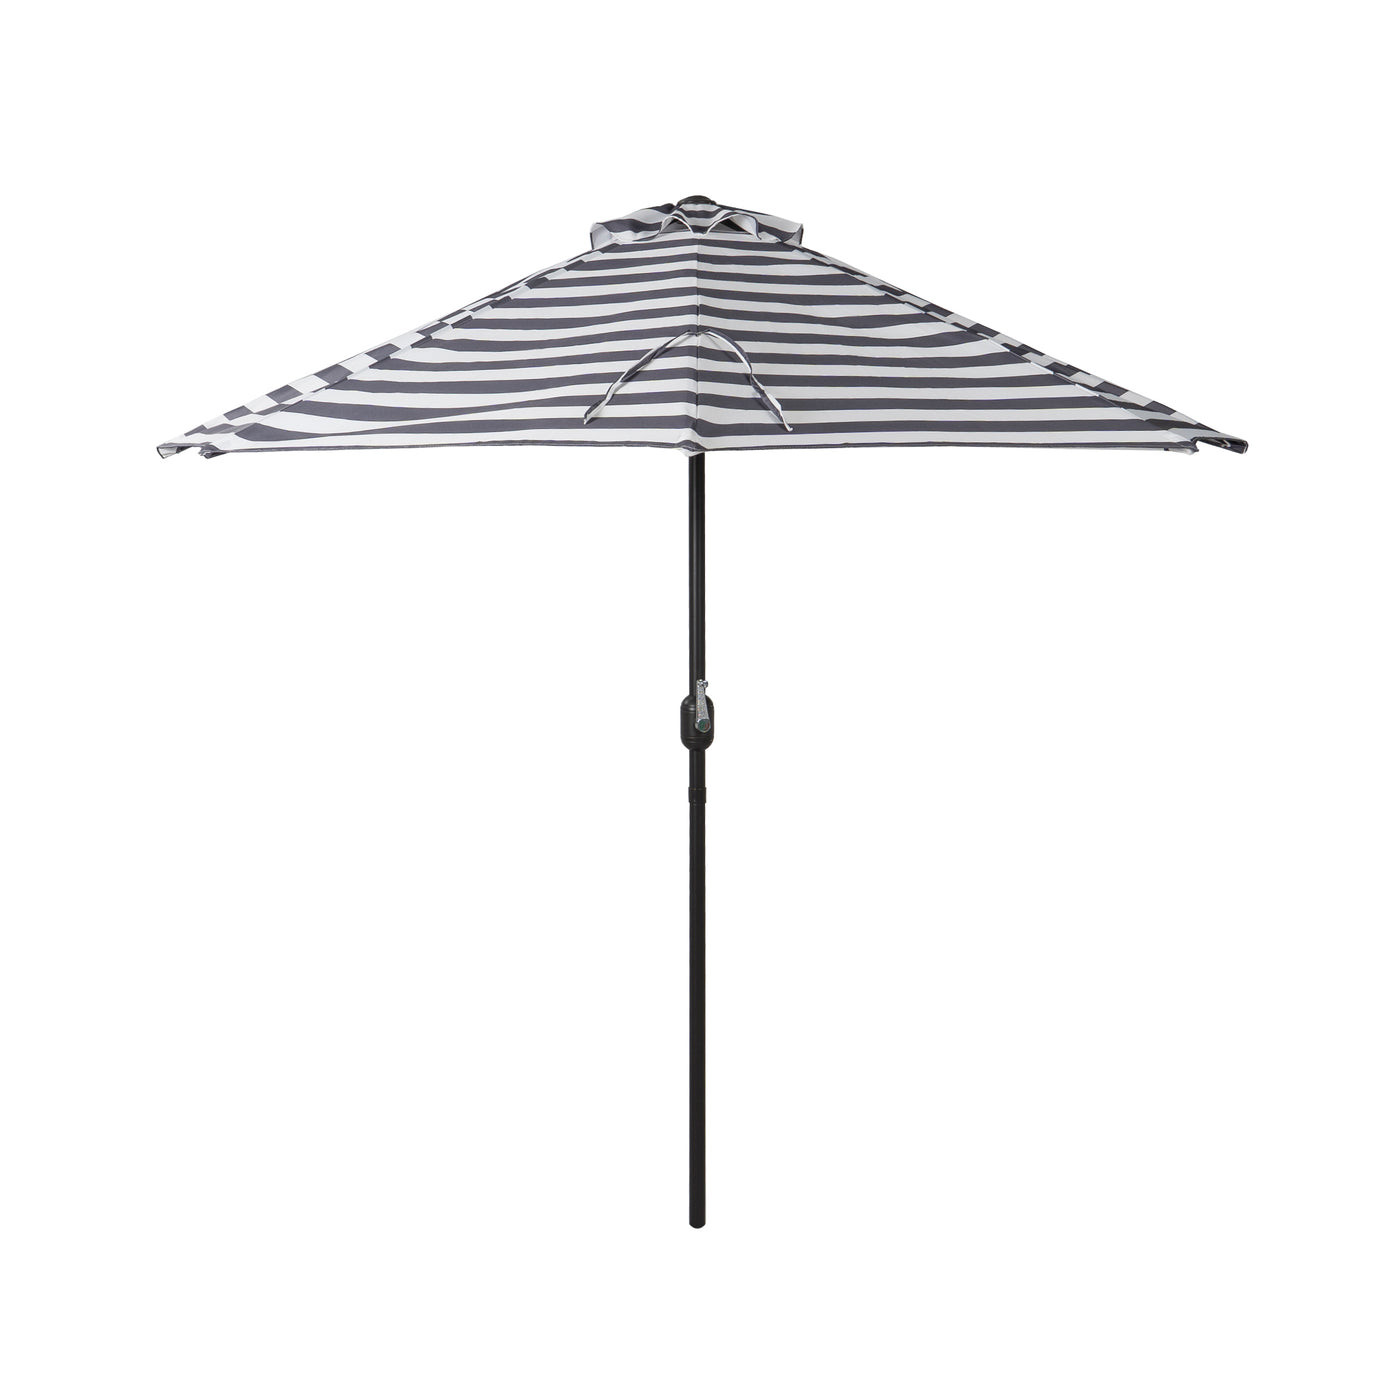 Lanai 9 ft. Aluminum Half Market Crank Lift Patio Umbrella with Bronze Round Base